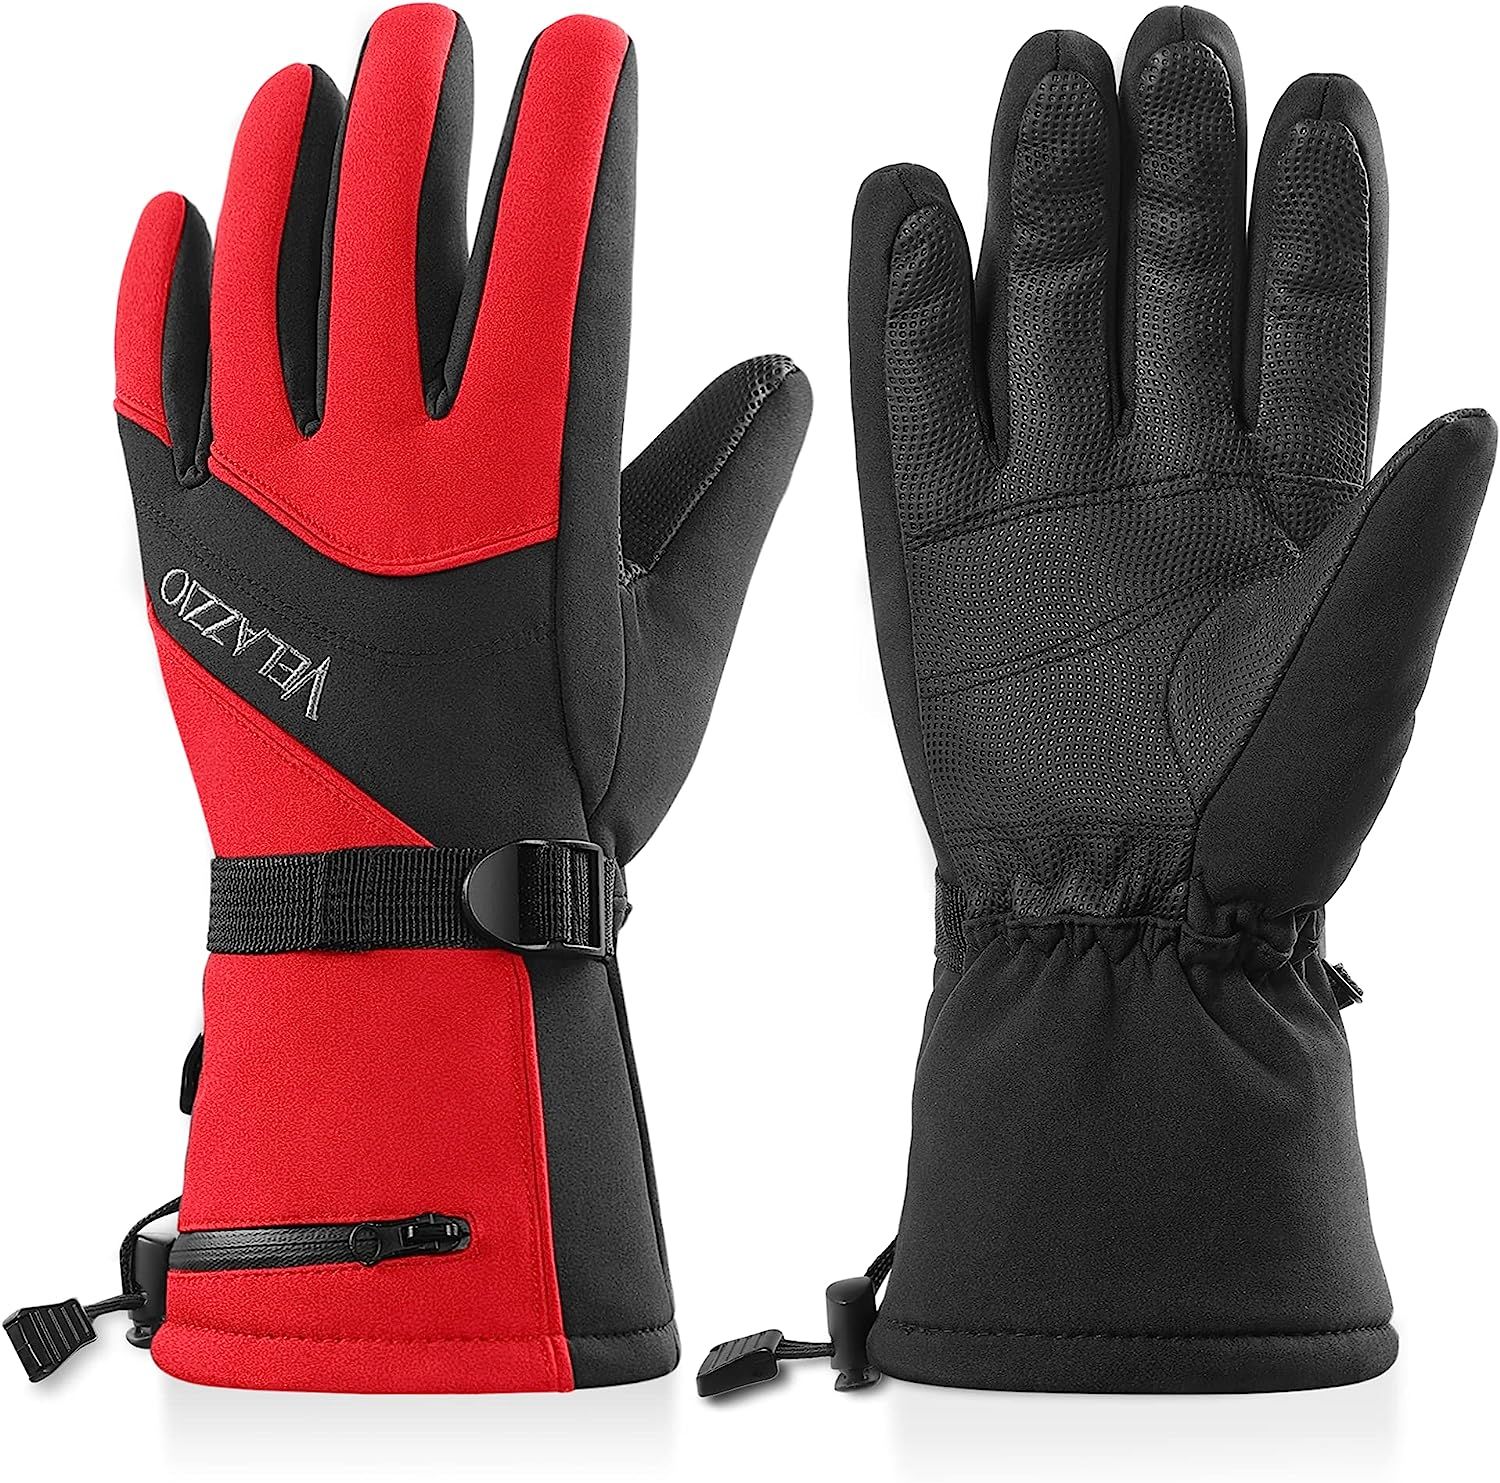 Ski Gloves - VELAZZIO Waterproof Breathable Snowboard Gloves, 3M Thinsulate Insulated Warm Winter Sn | Amazon (US)